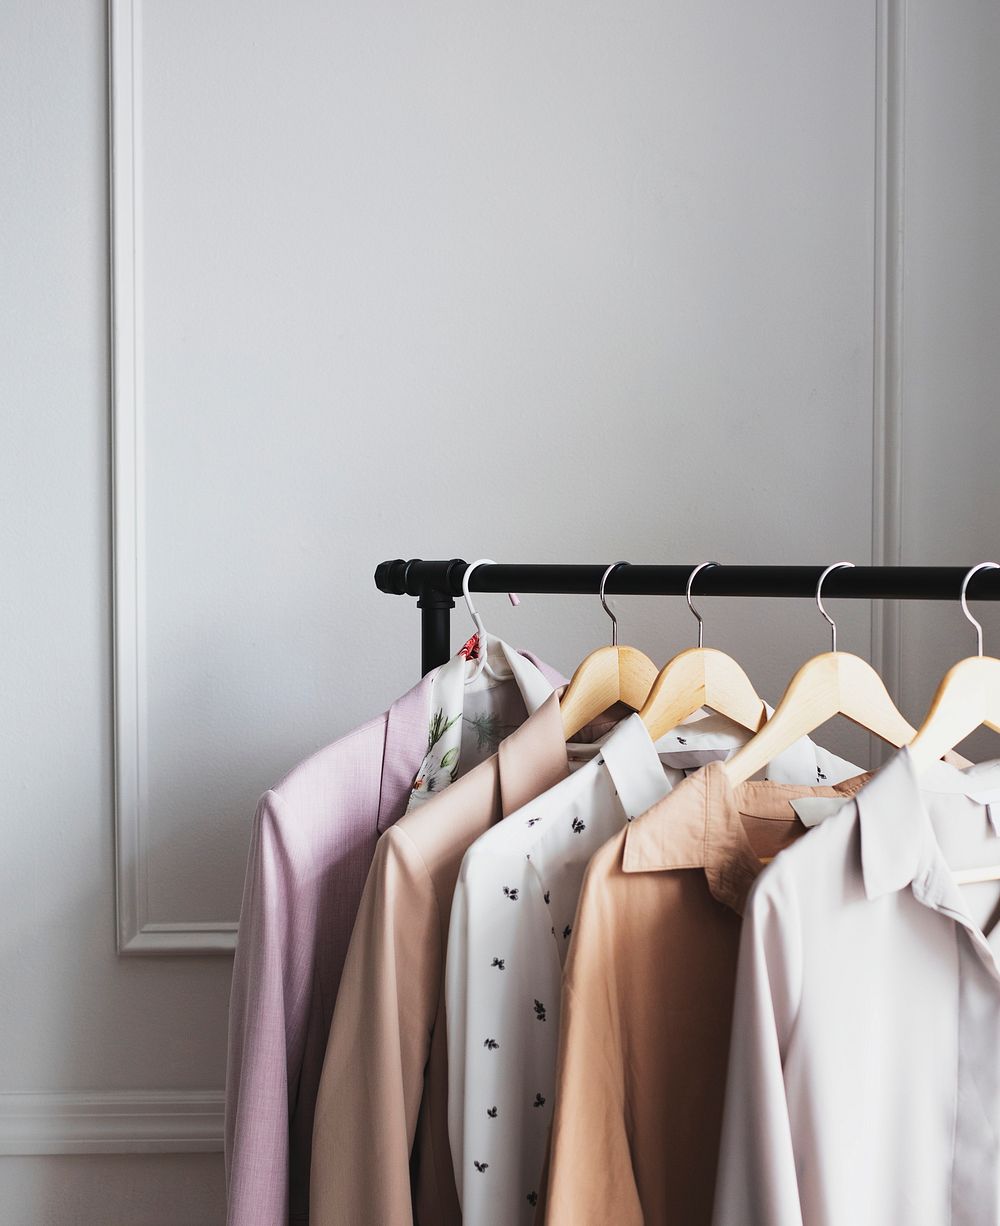 Clothing rack in a studio